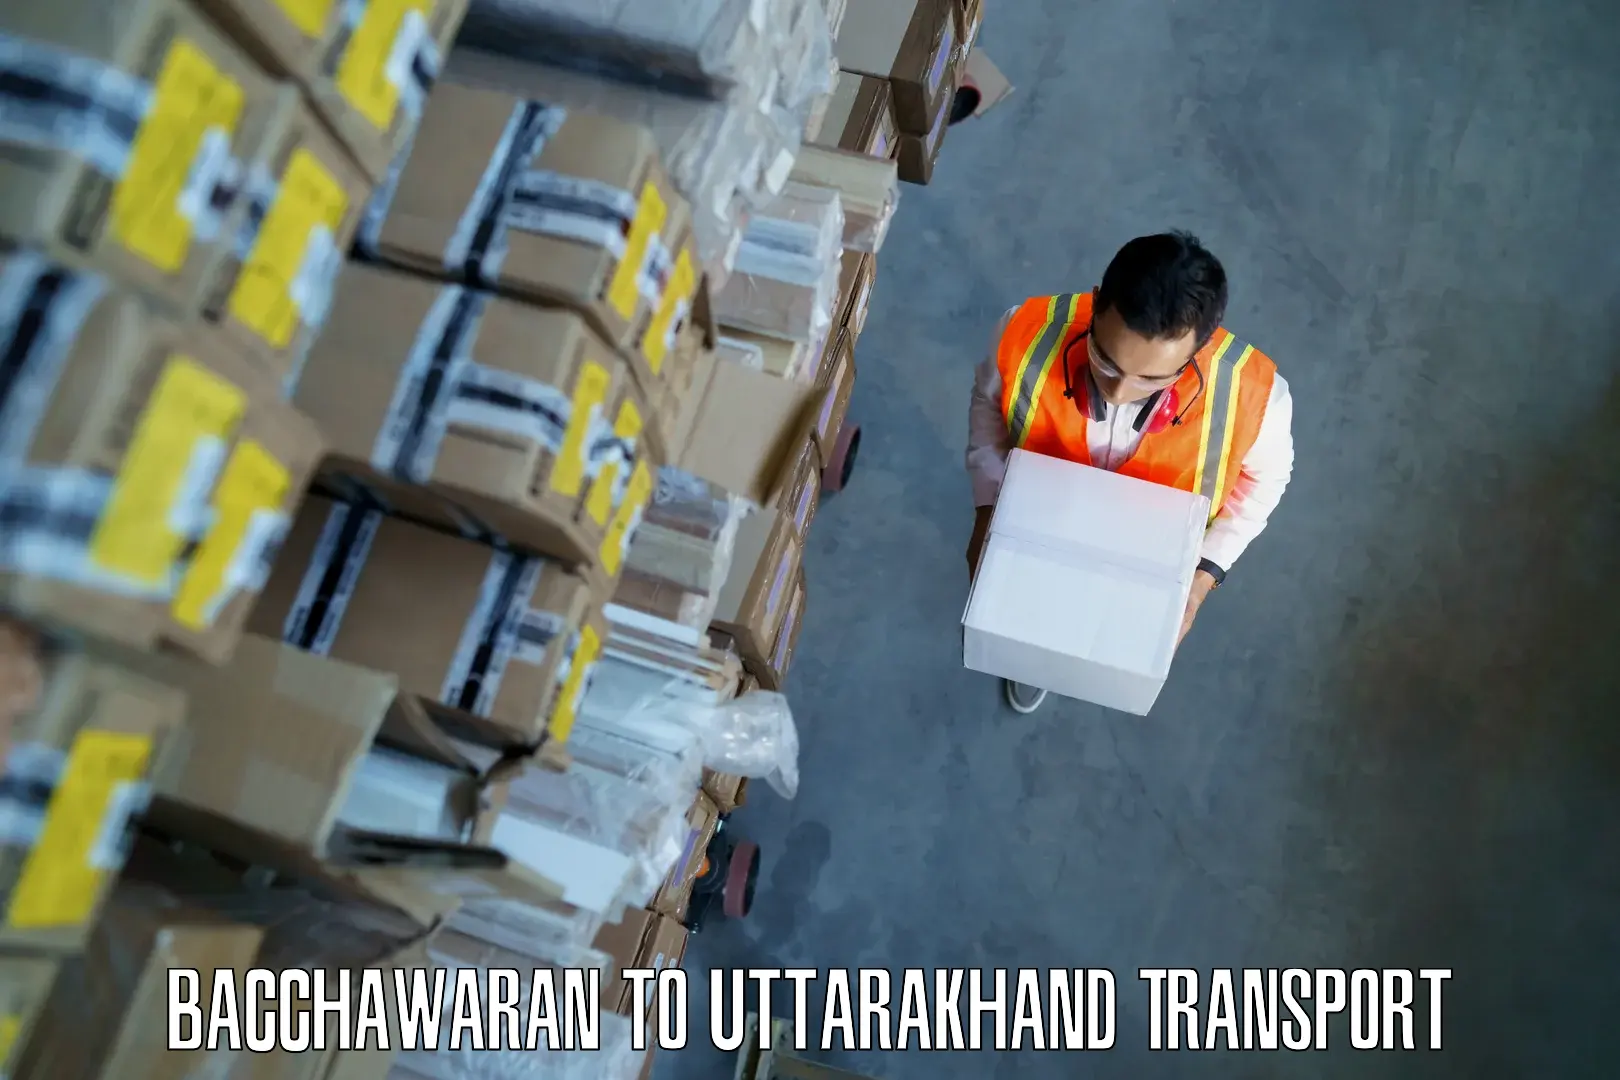 Furniture transport service Bacchawaran to Uttarakhand